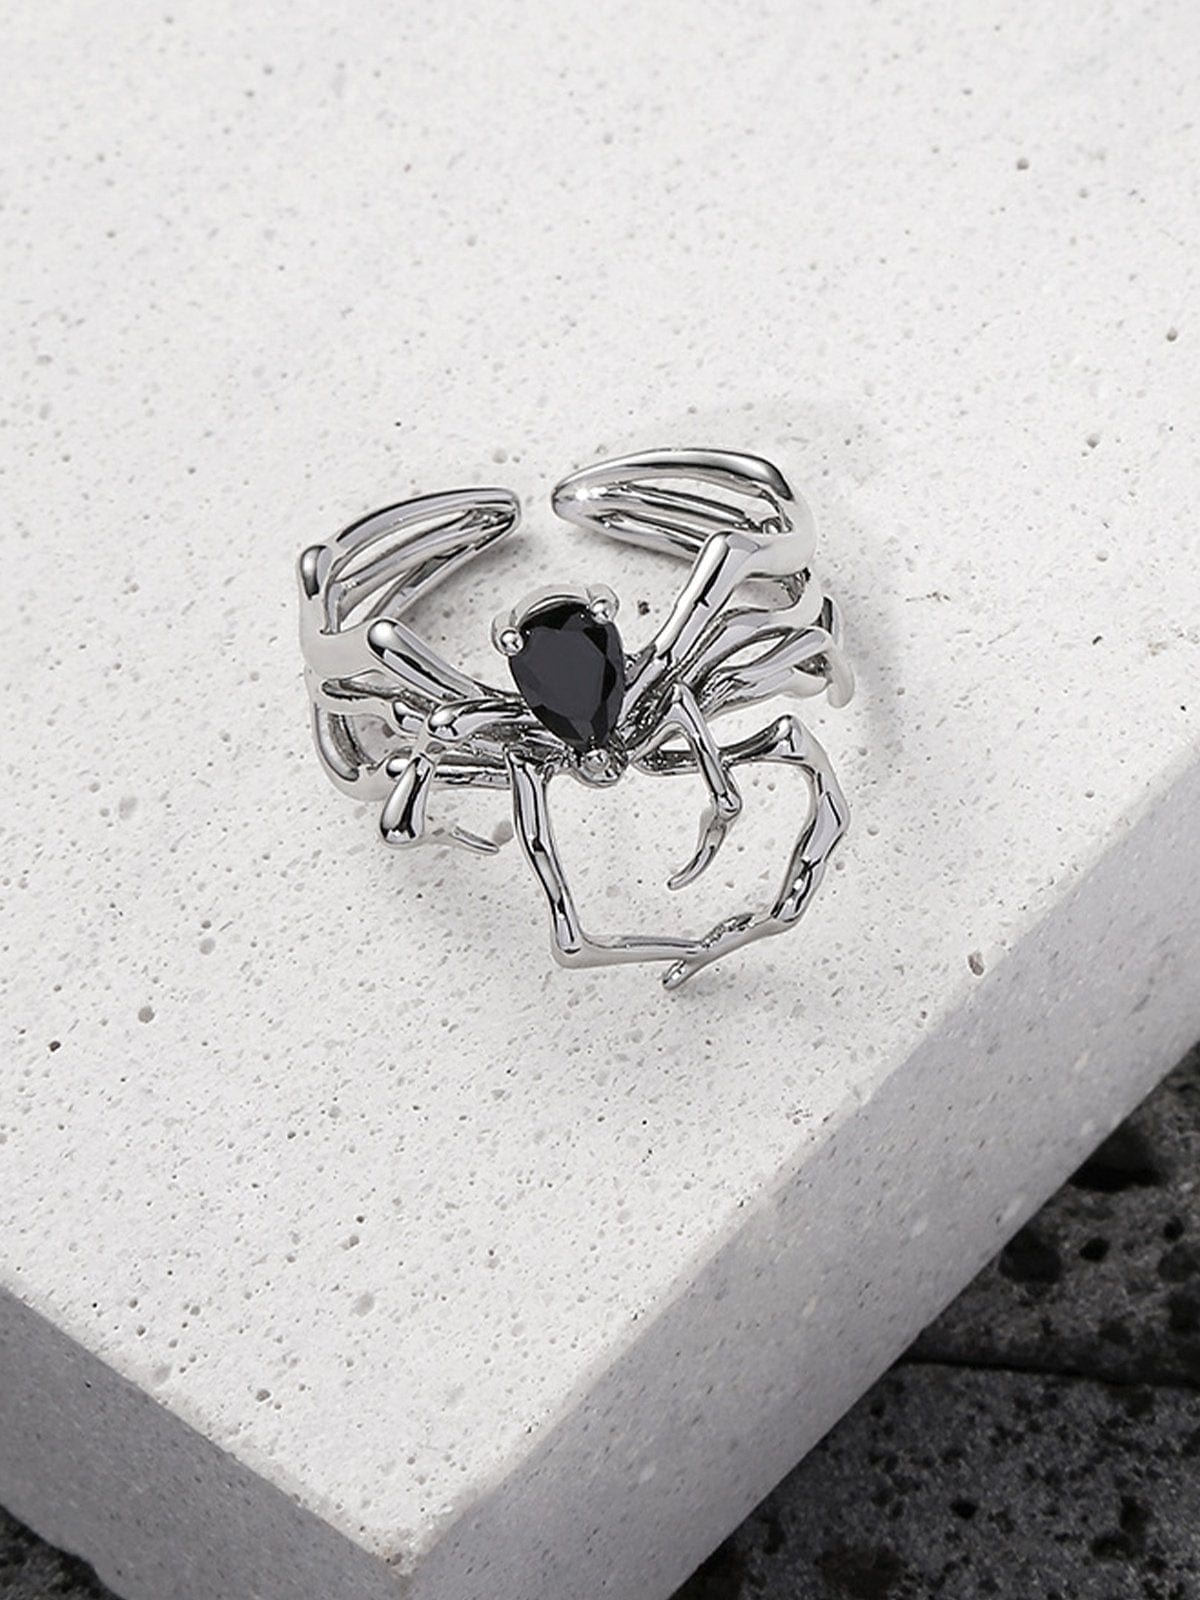 NEV Artificial Gemstone Spider Ring